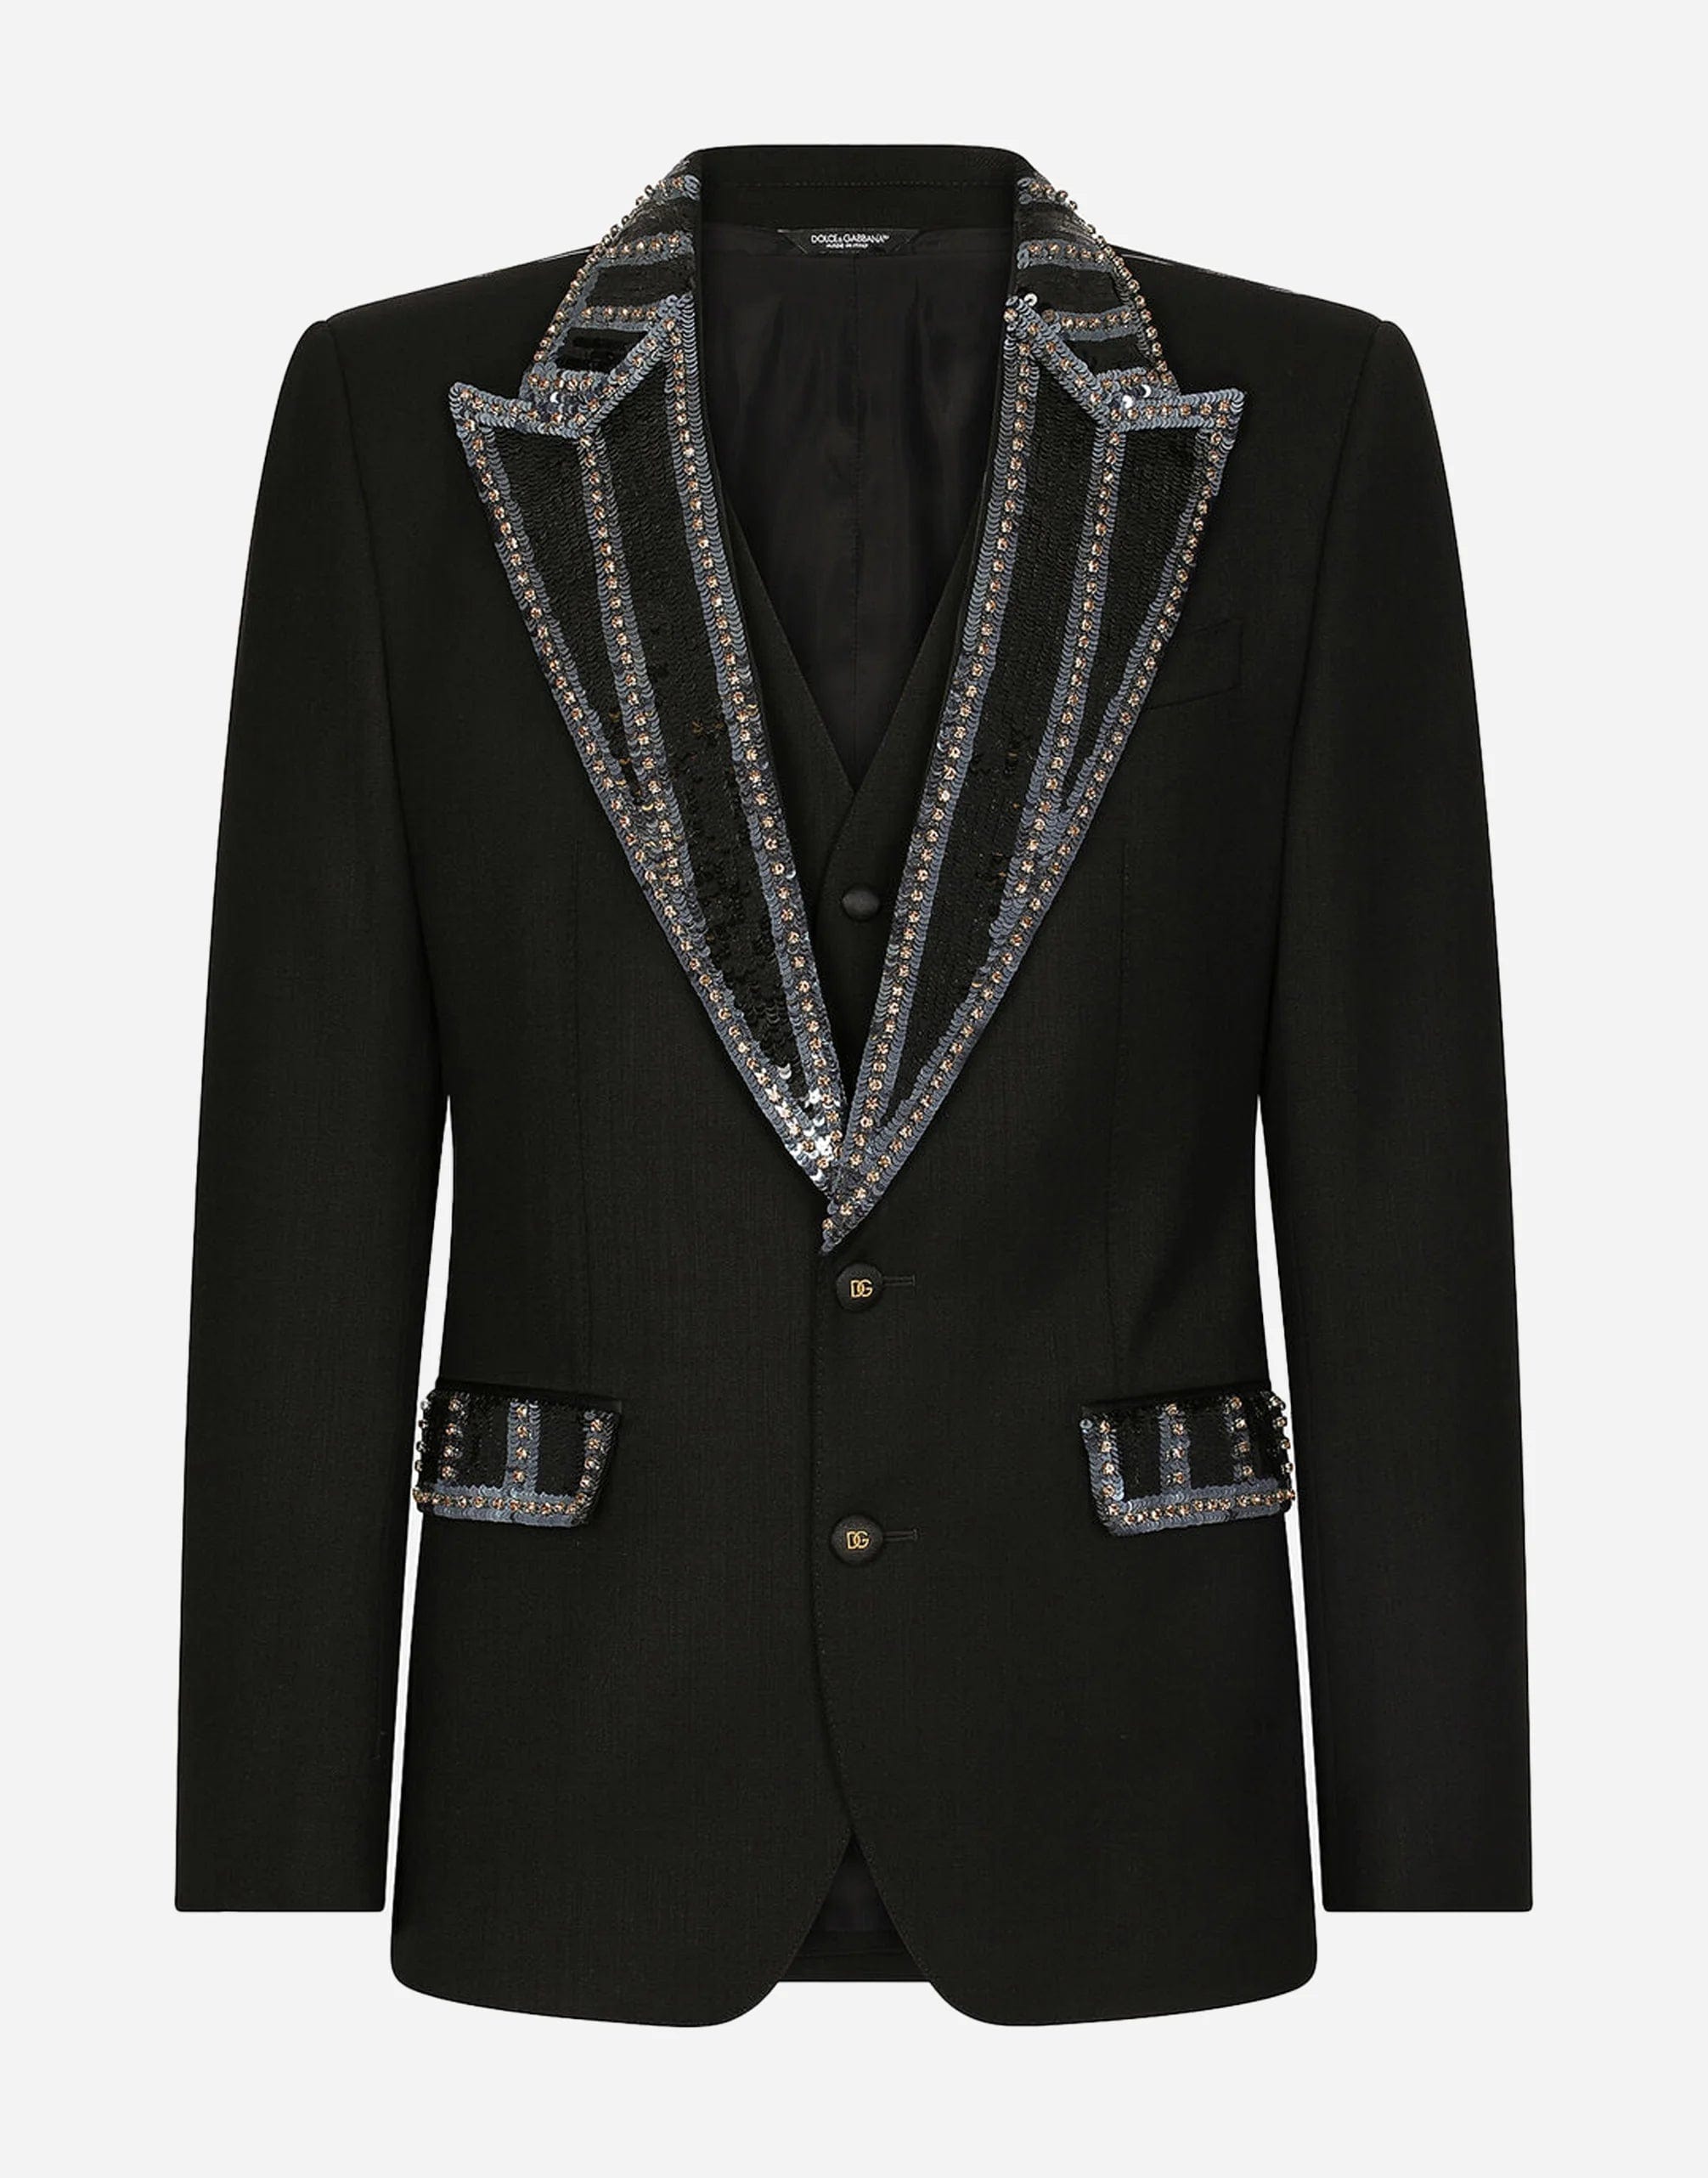 Rhinestone Embellished Two-Piece Stretch Sicilia-Fit Suit